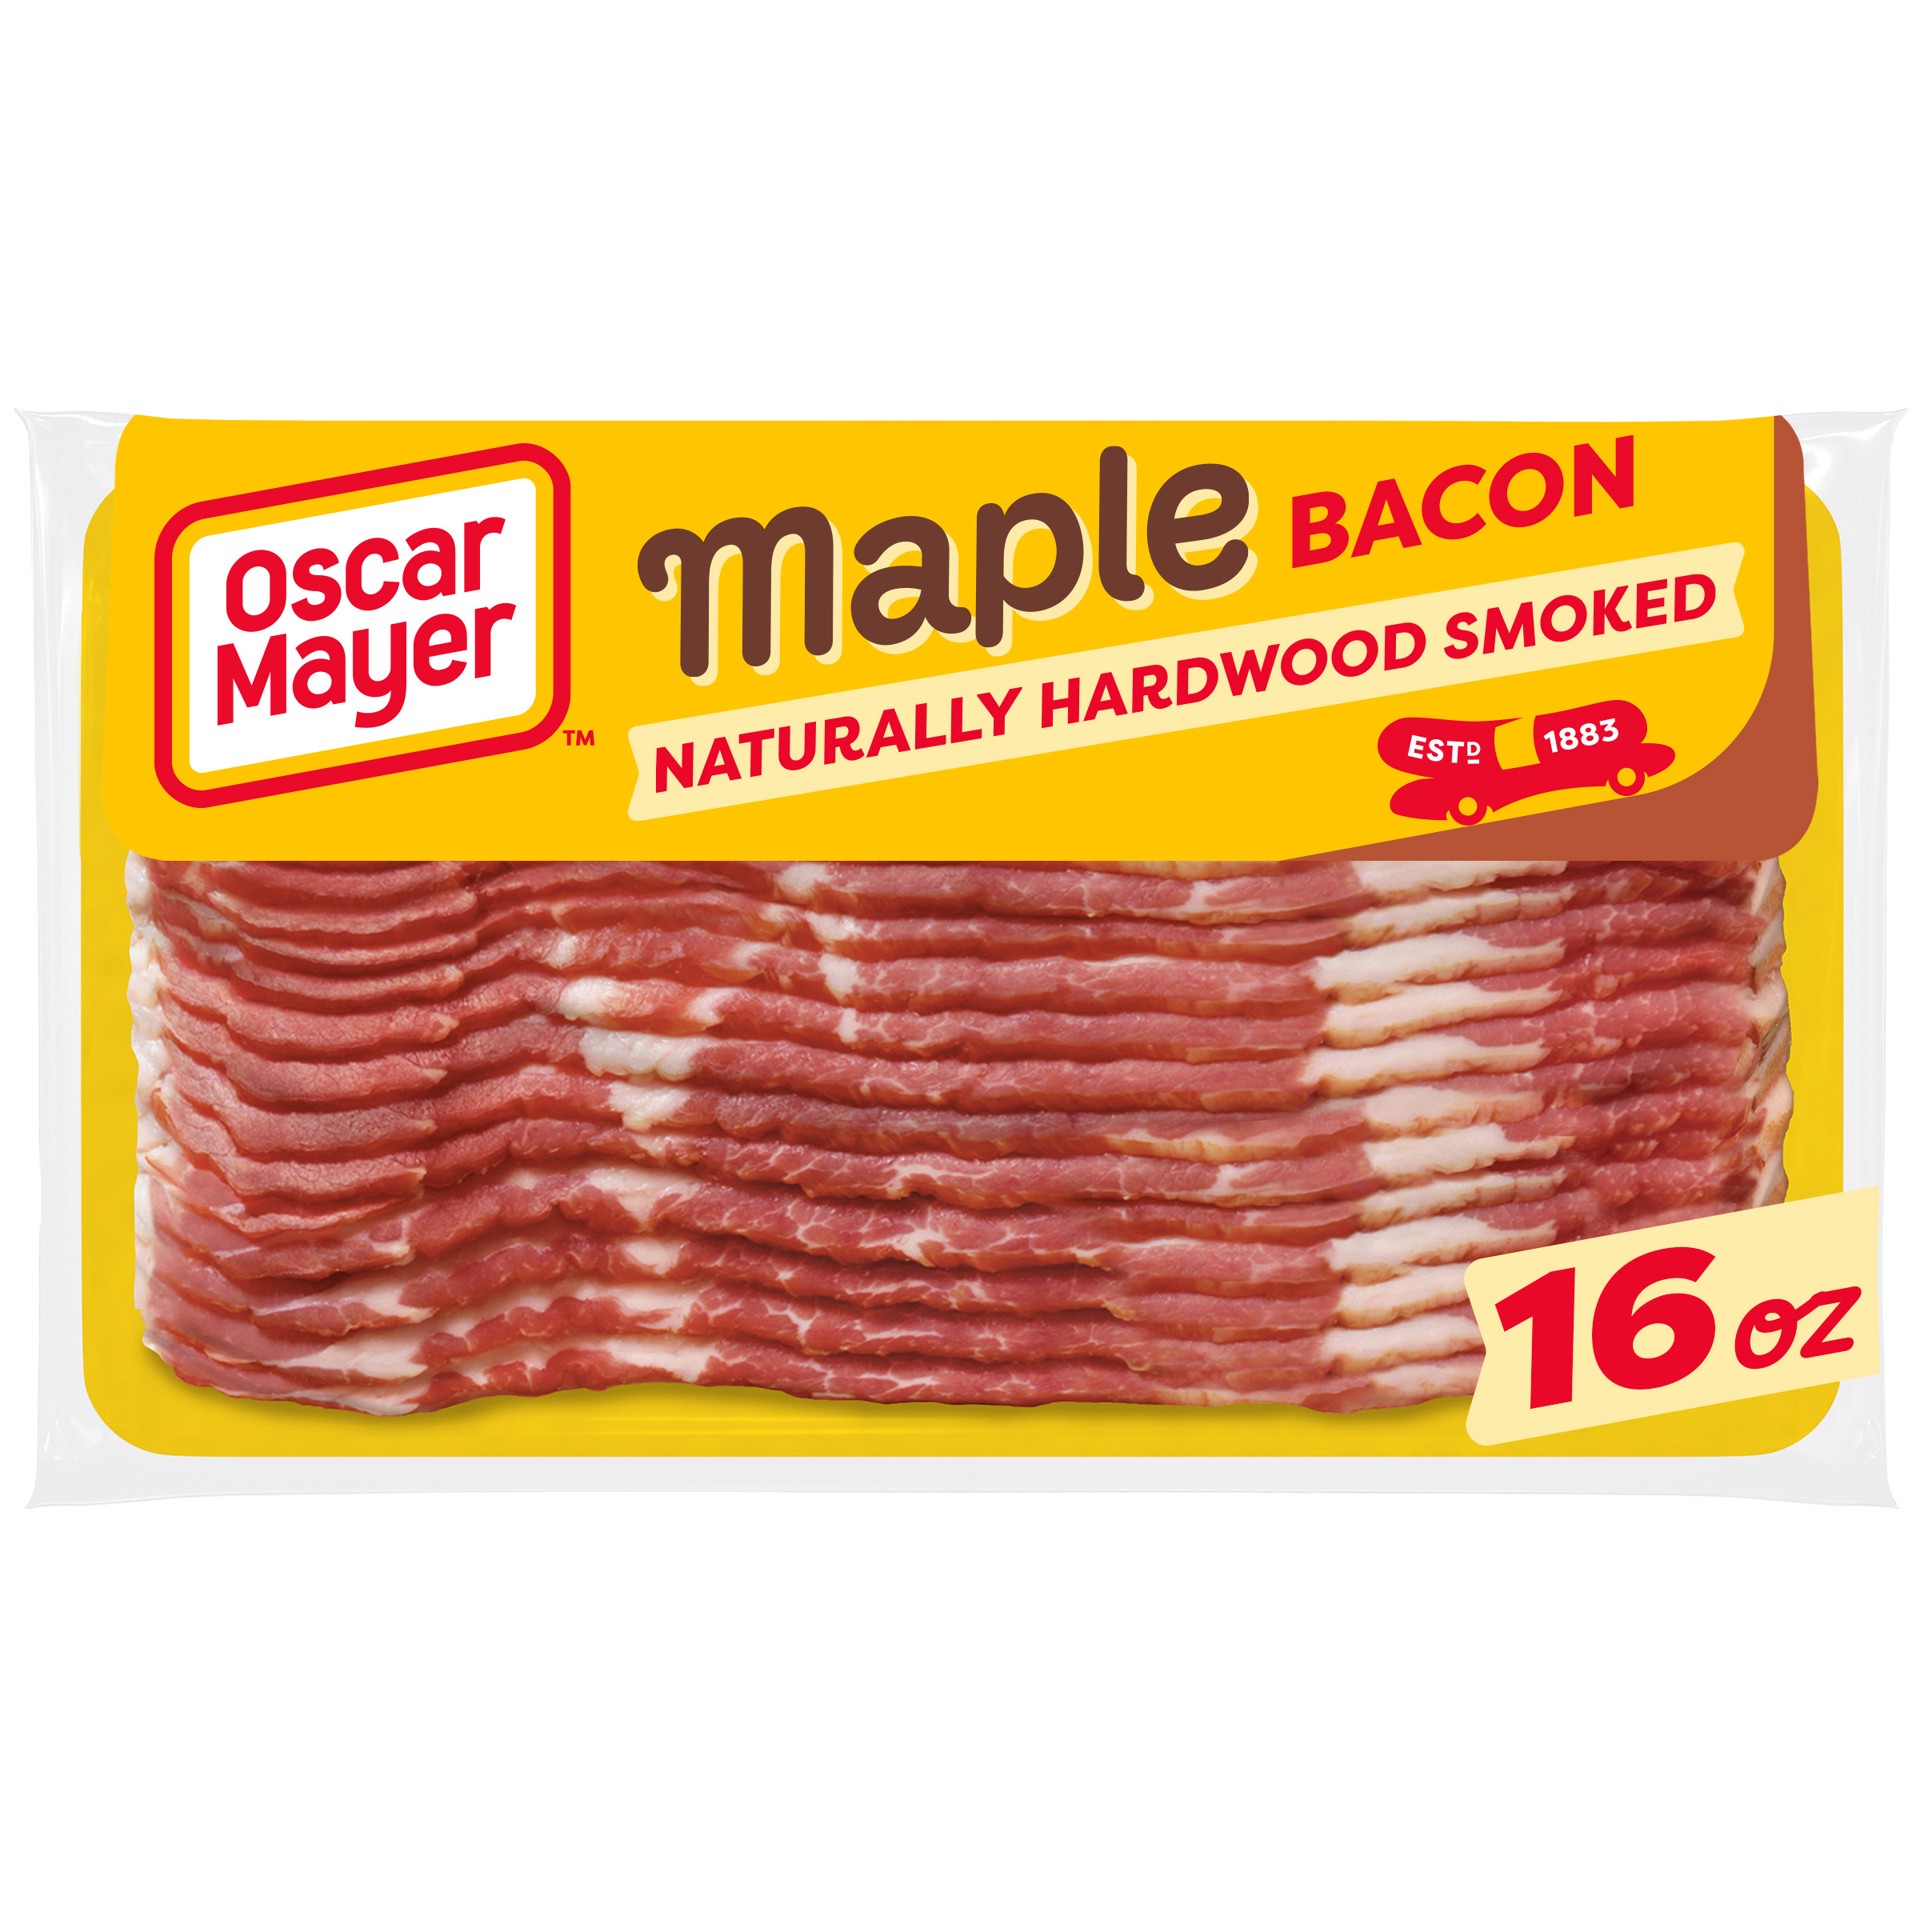 slide 1 of 8, Oscar Mayer Naturally Hardwood Smoked Maple Bacon, 16 oz Pack, 15-17 slices, 16 oz